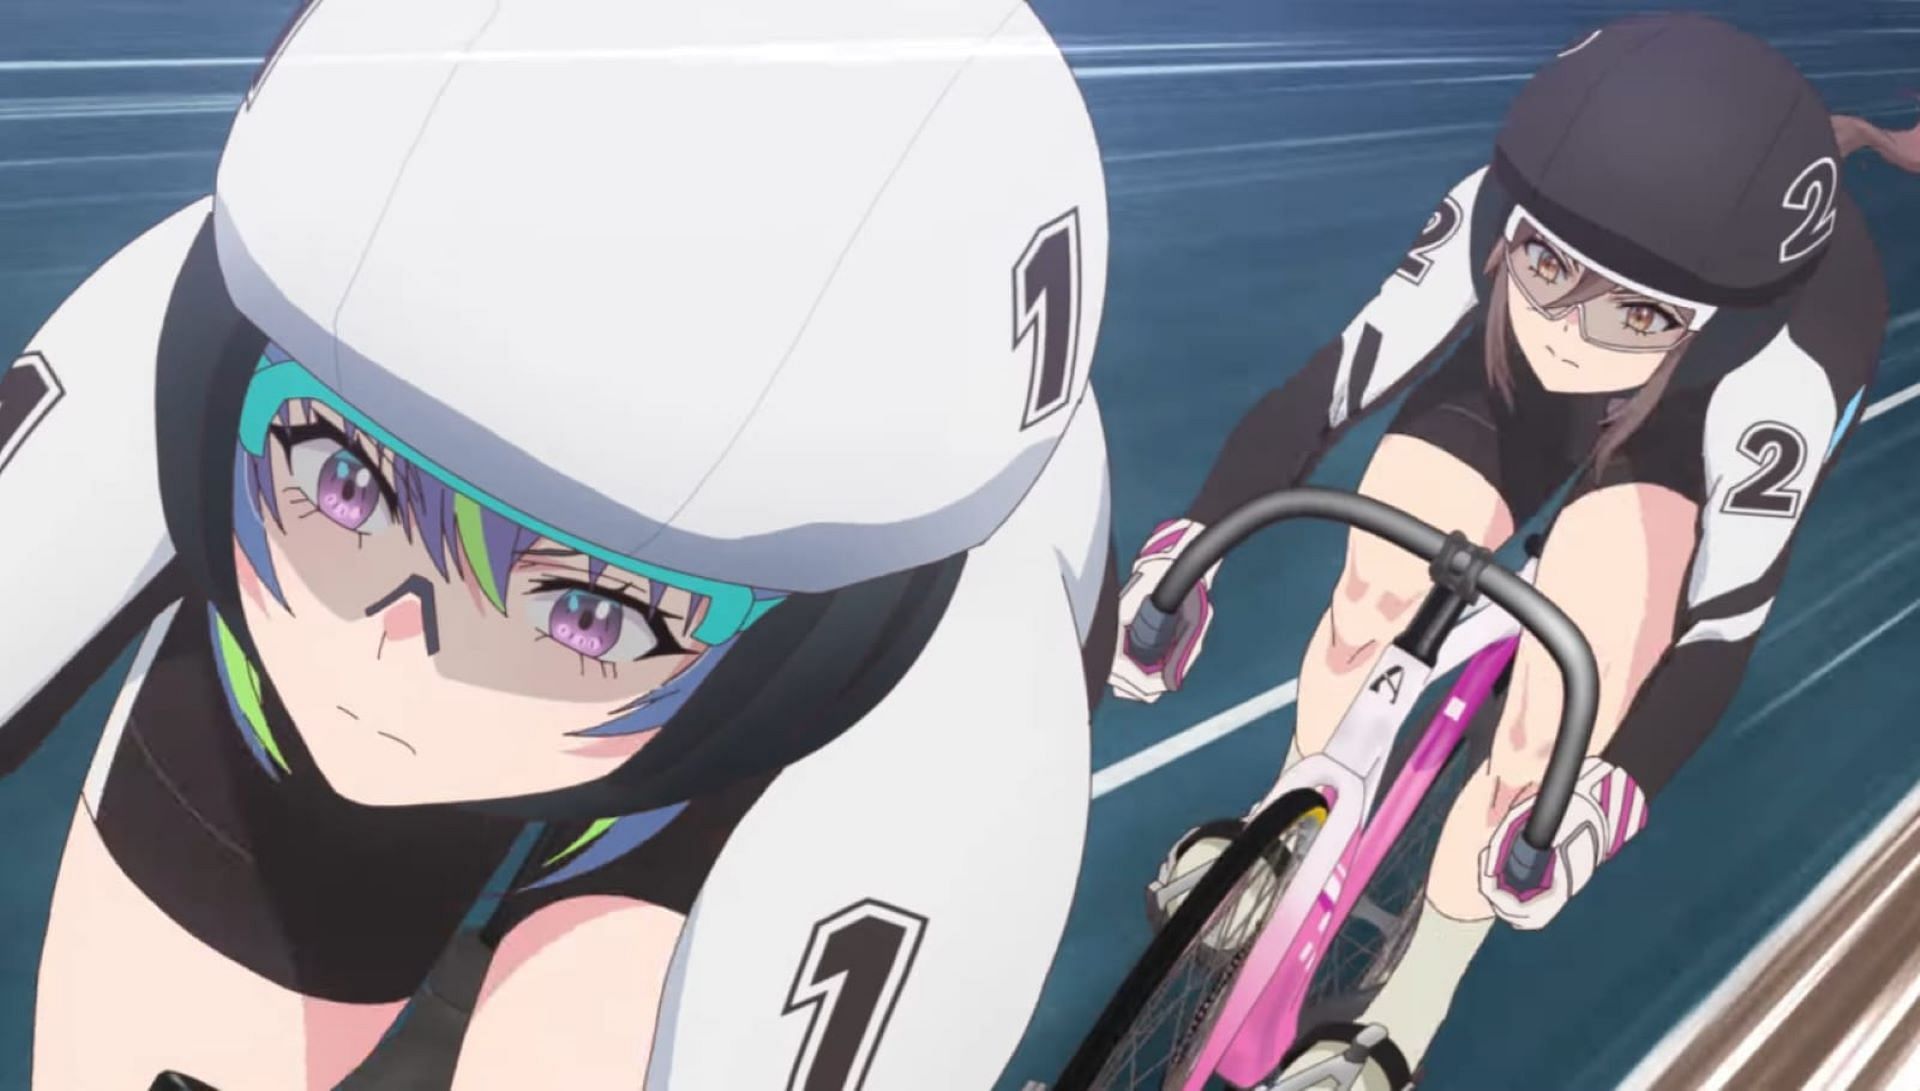 Mikasa on a bike - Cycling anime art | OpenSea